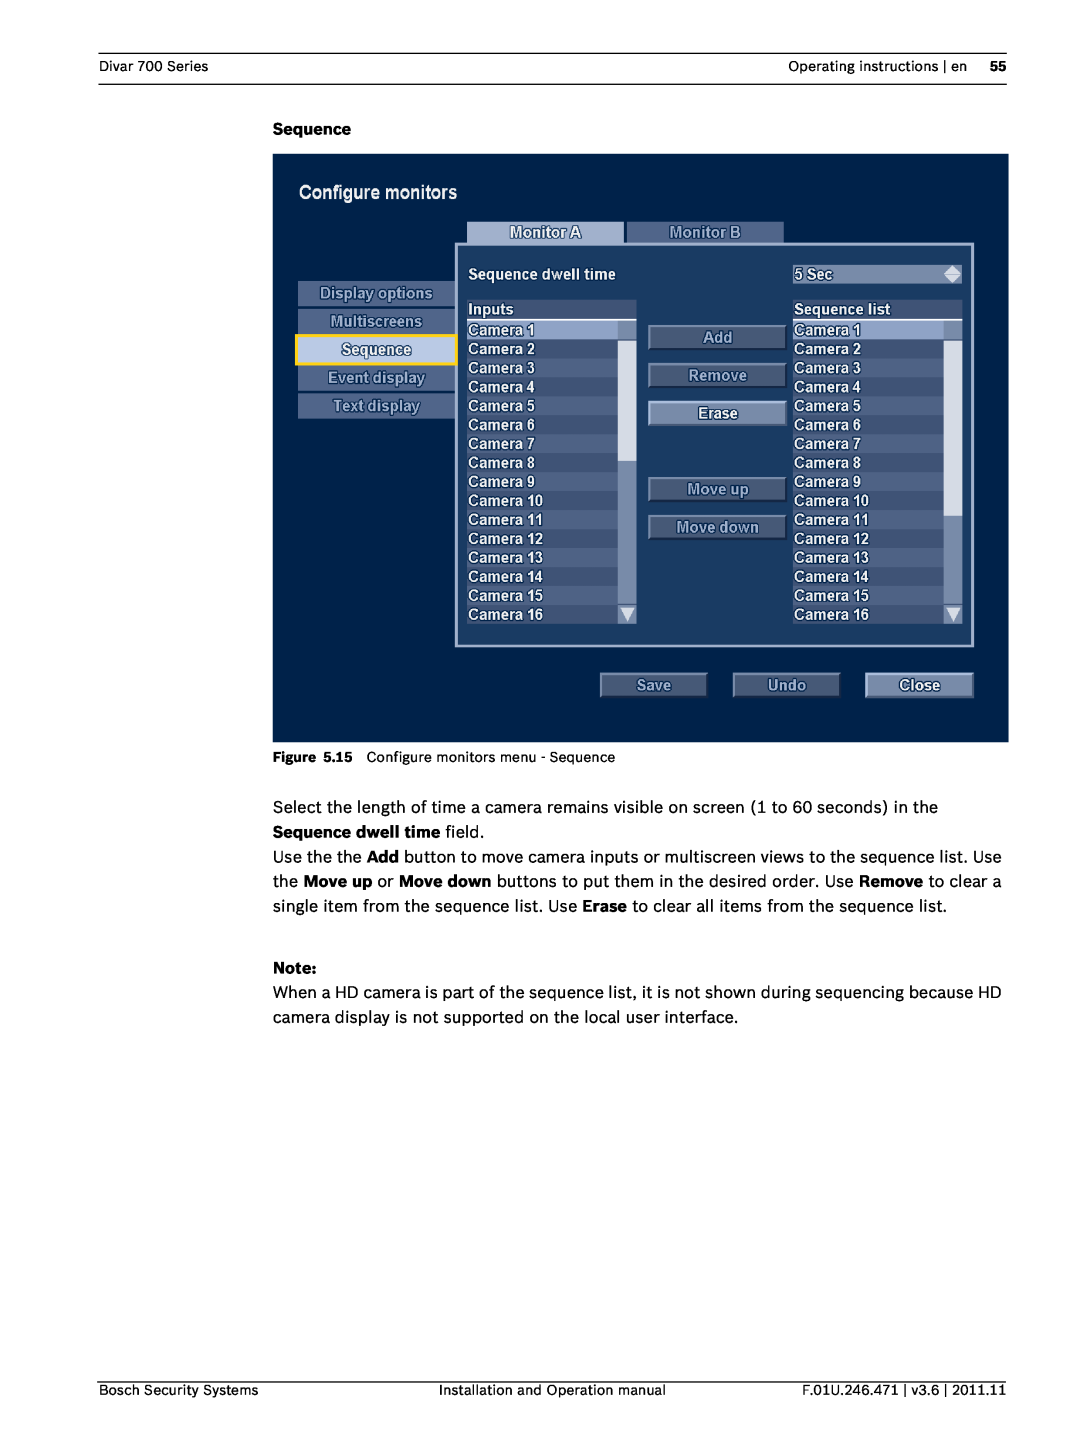 Bosch Appliances Divar 700 Series, Operating instructions | en, 15 Configure monitors menu - Sequence 